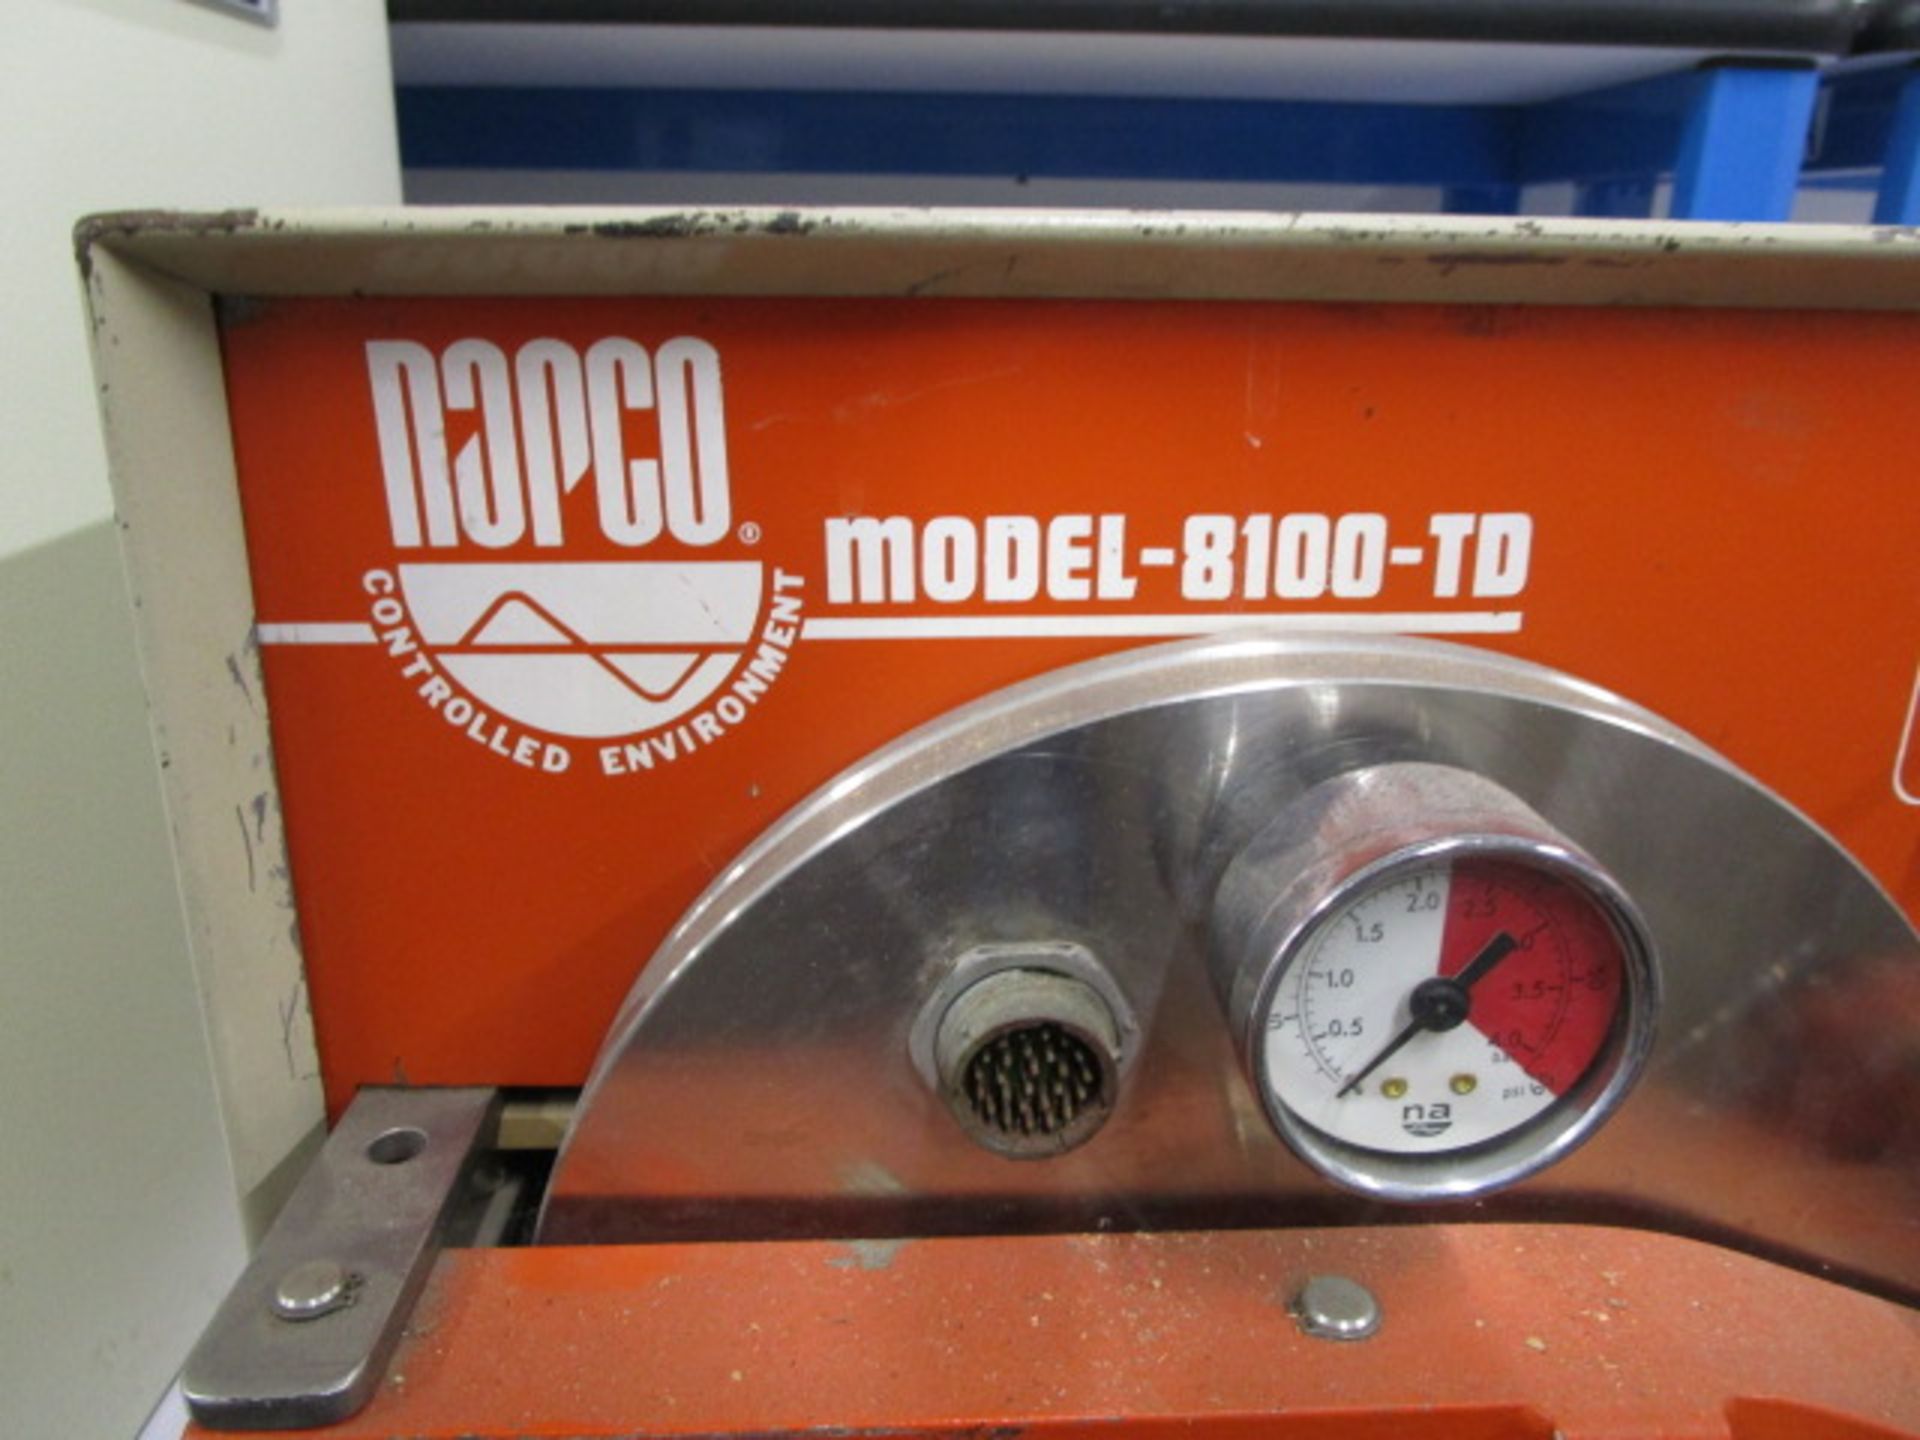 NAPCO MODEL 8100-TD BENCH-TOP AUTOCLAVE / STERILIZER - Image 2 of 6